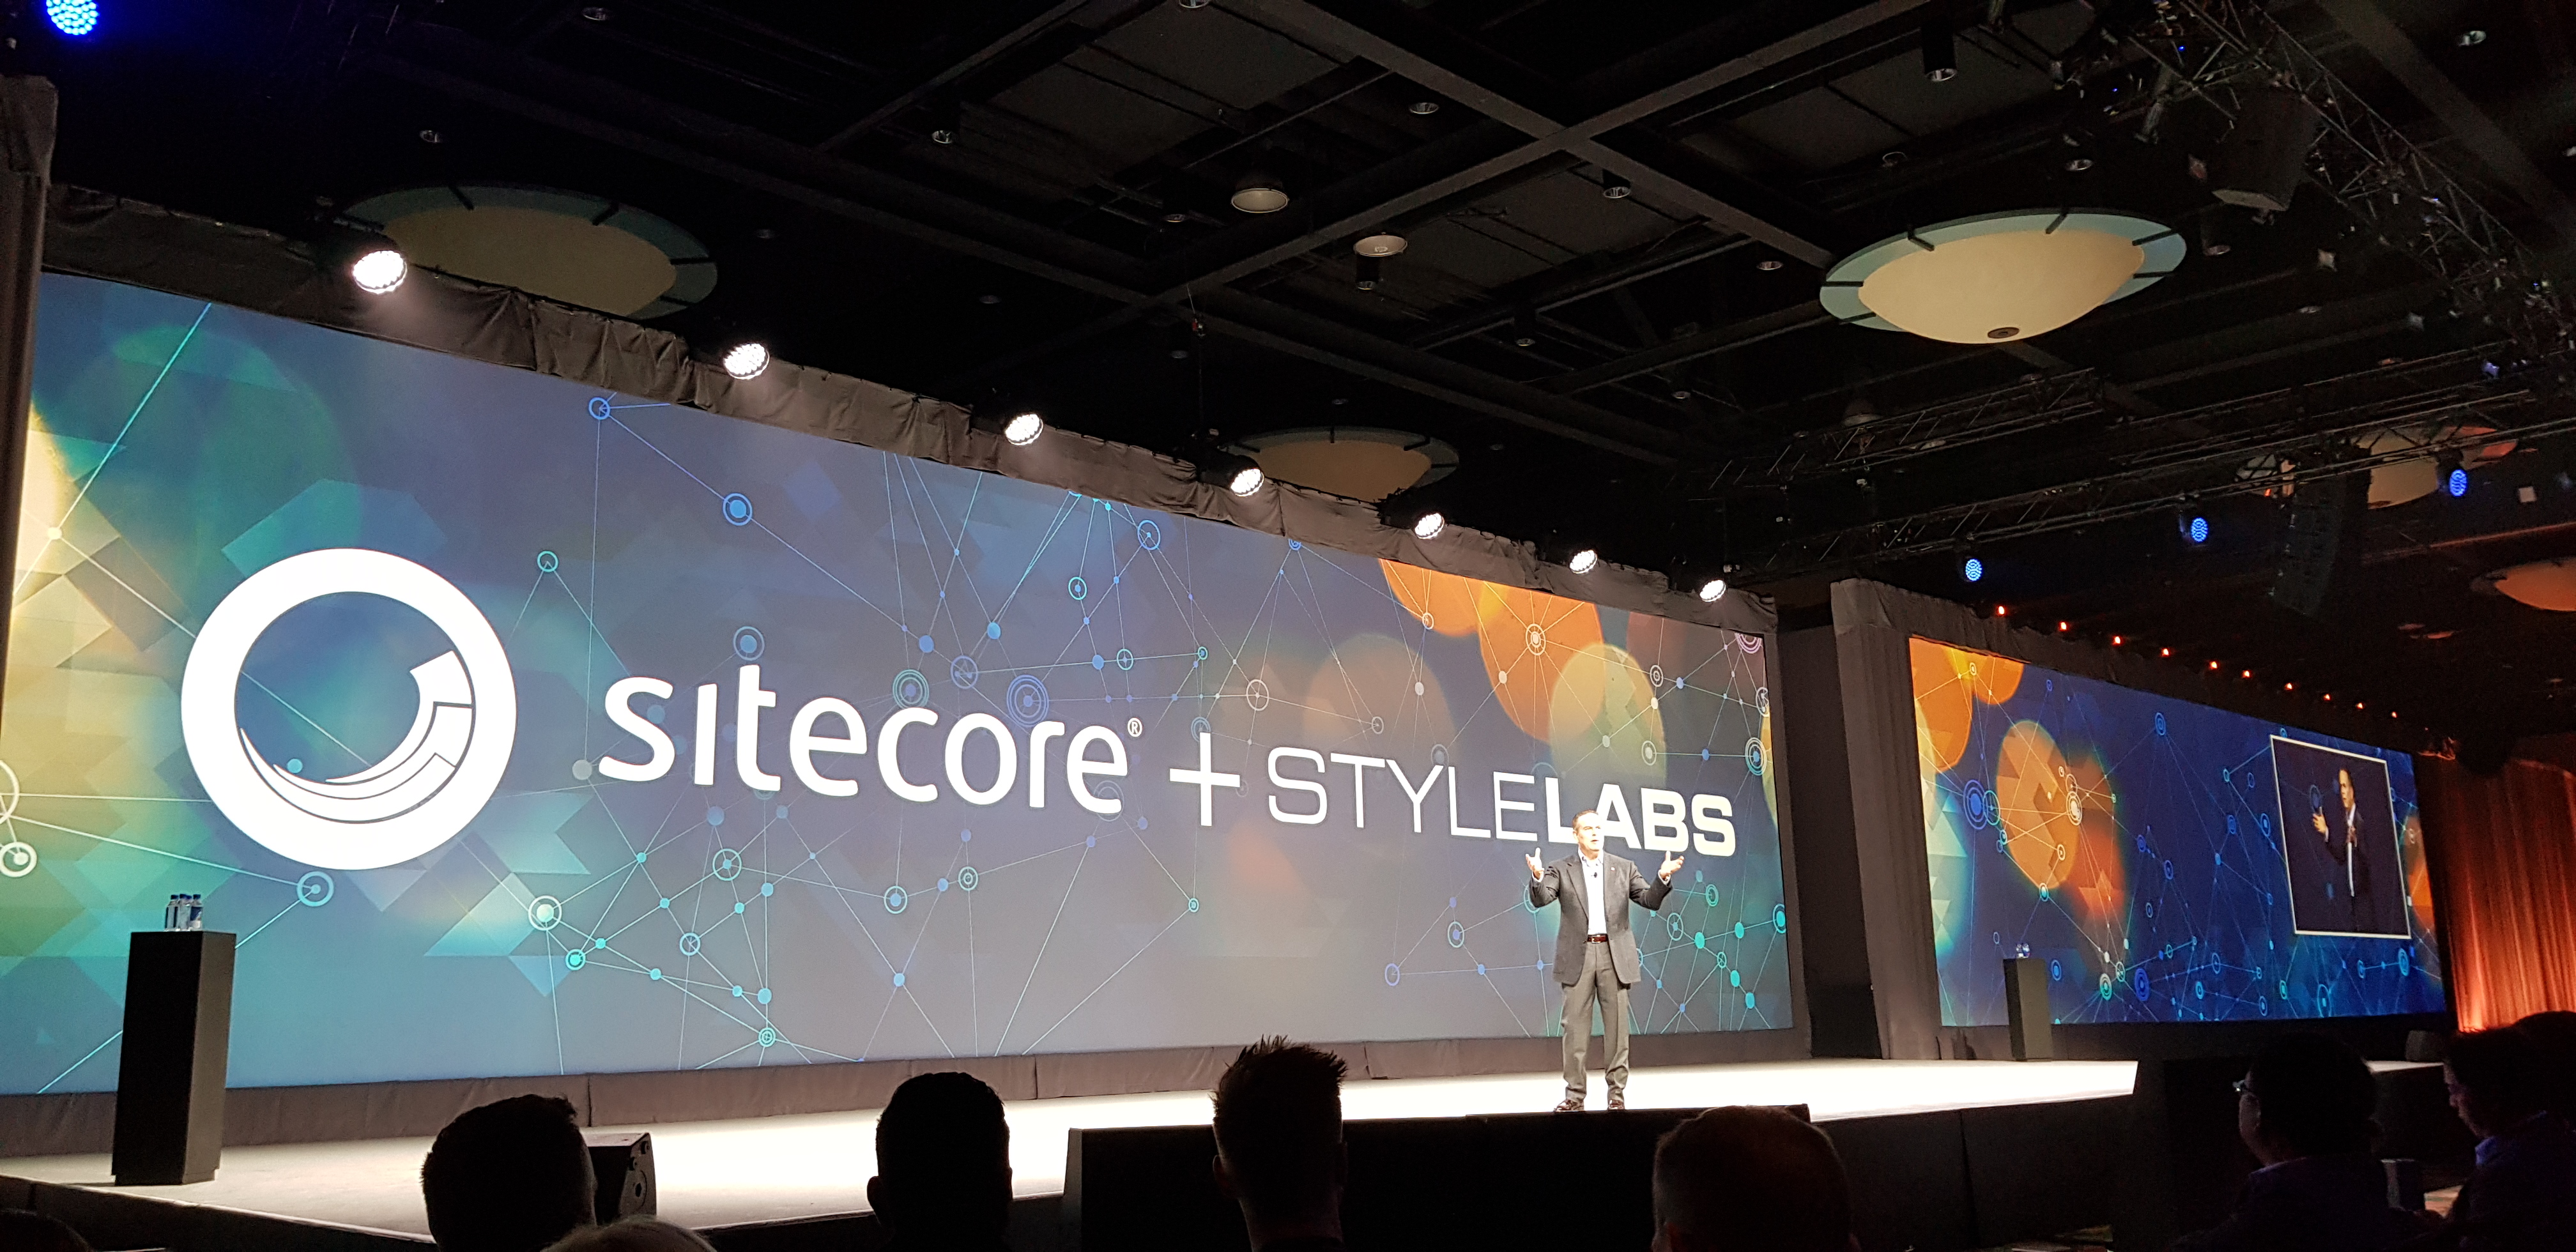 Sitecore + Stylelabs